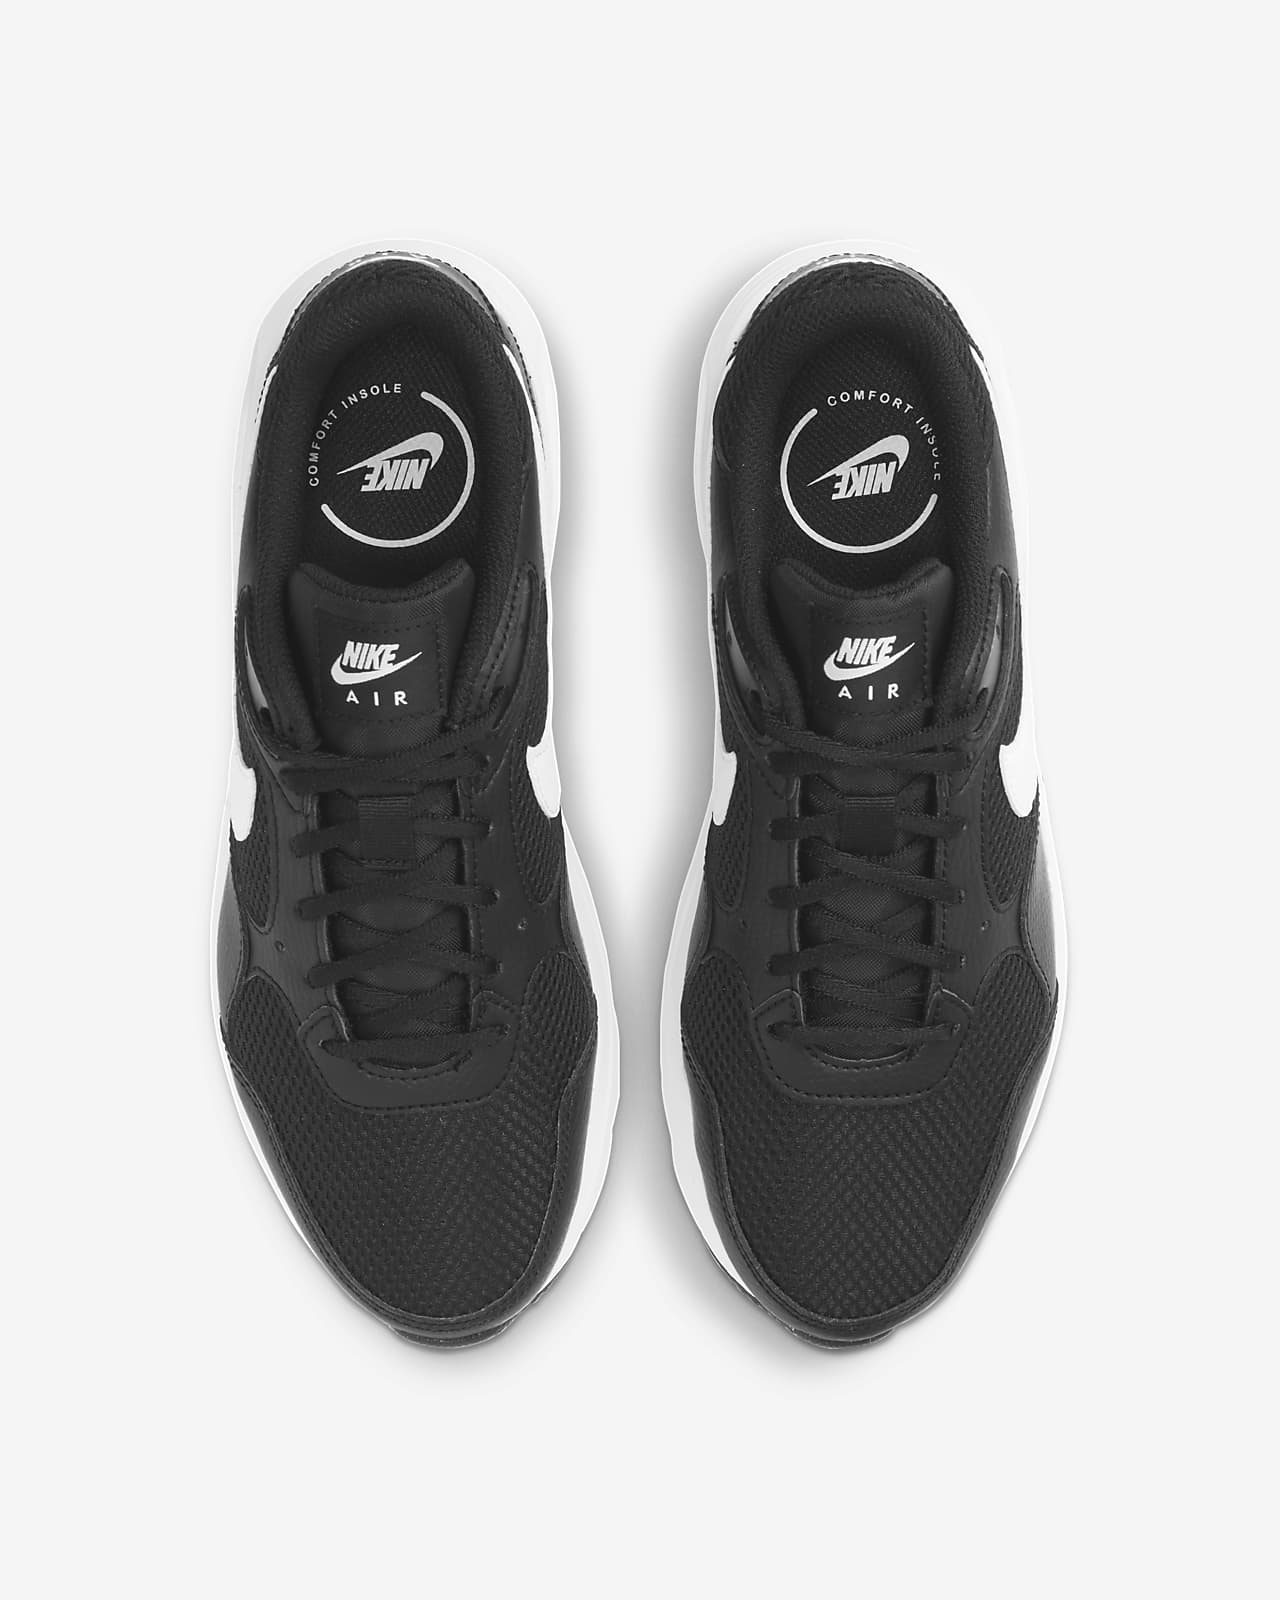 Air max 1 Nike Noir taille 45.5 EU en Suede - 39256334